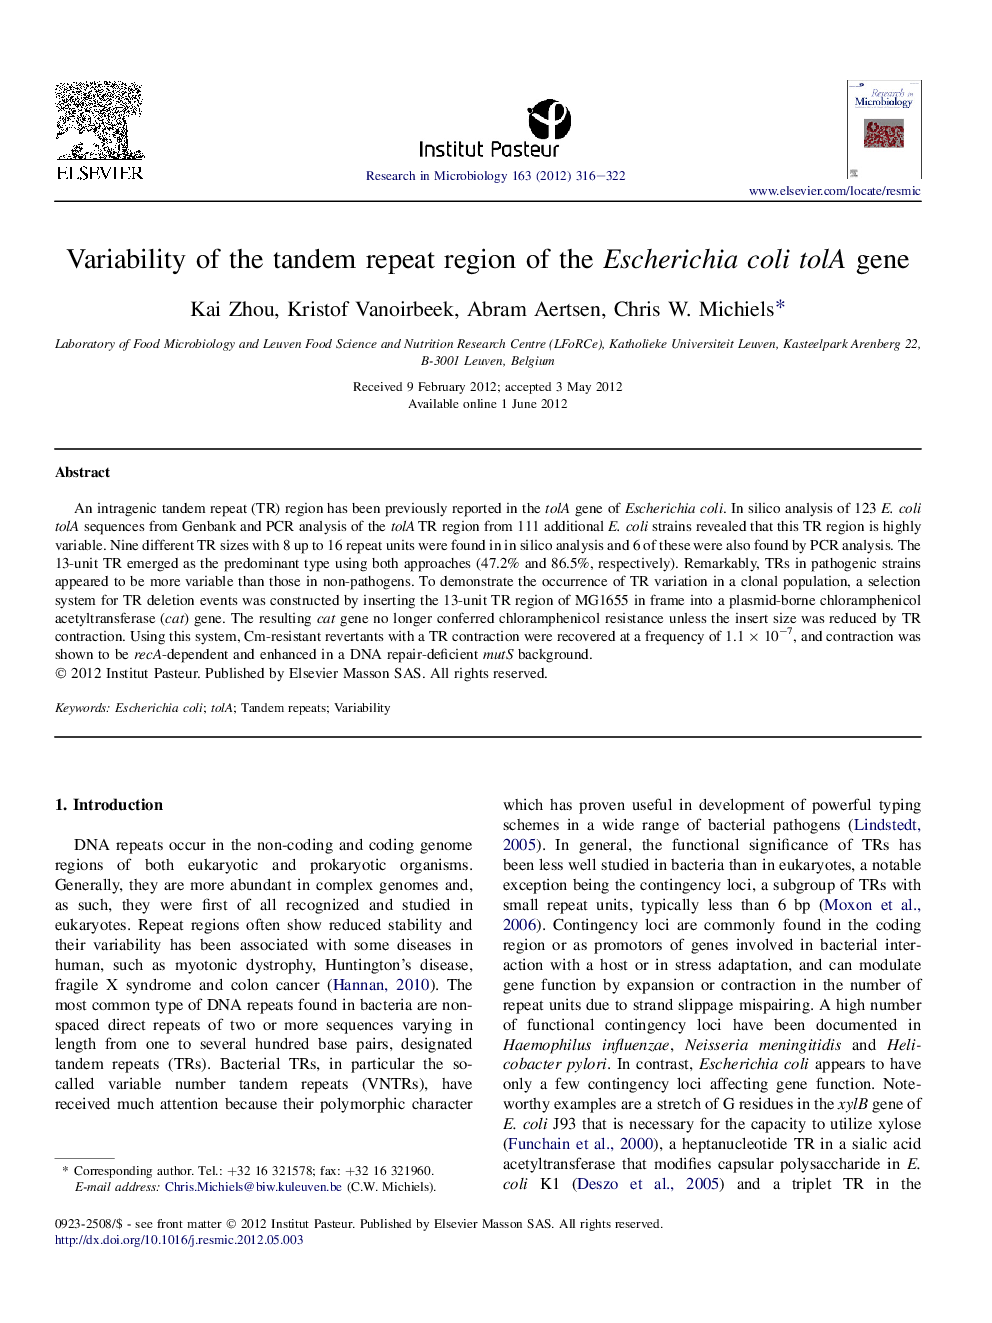 Variability of the tandem repeat region of the Escherichia coli tolA gene